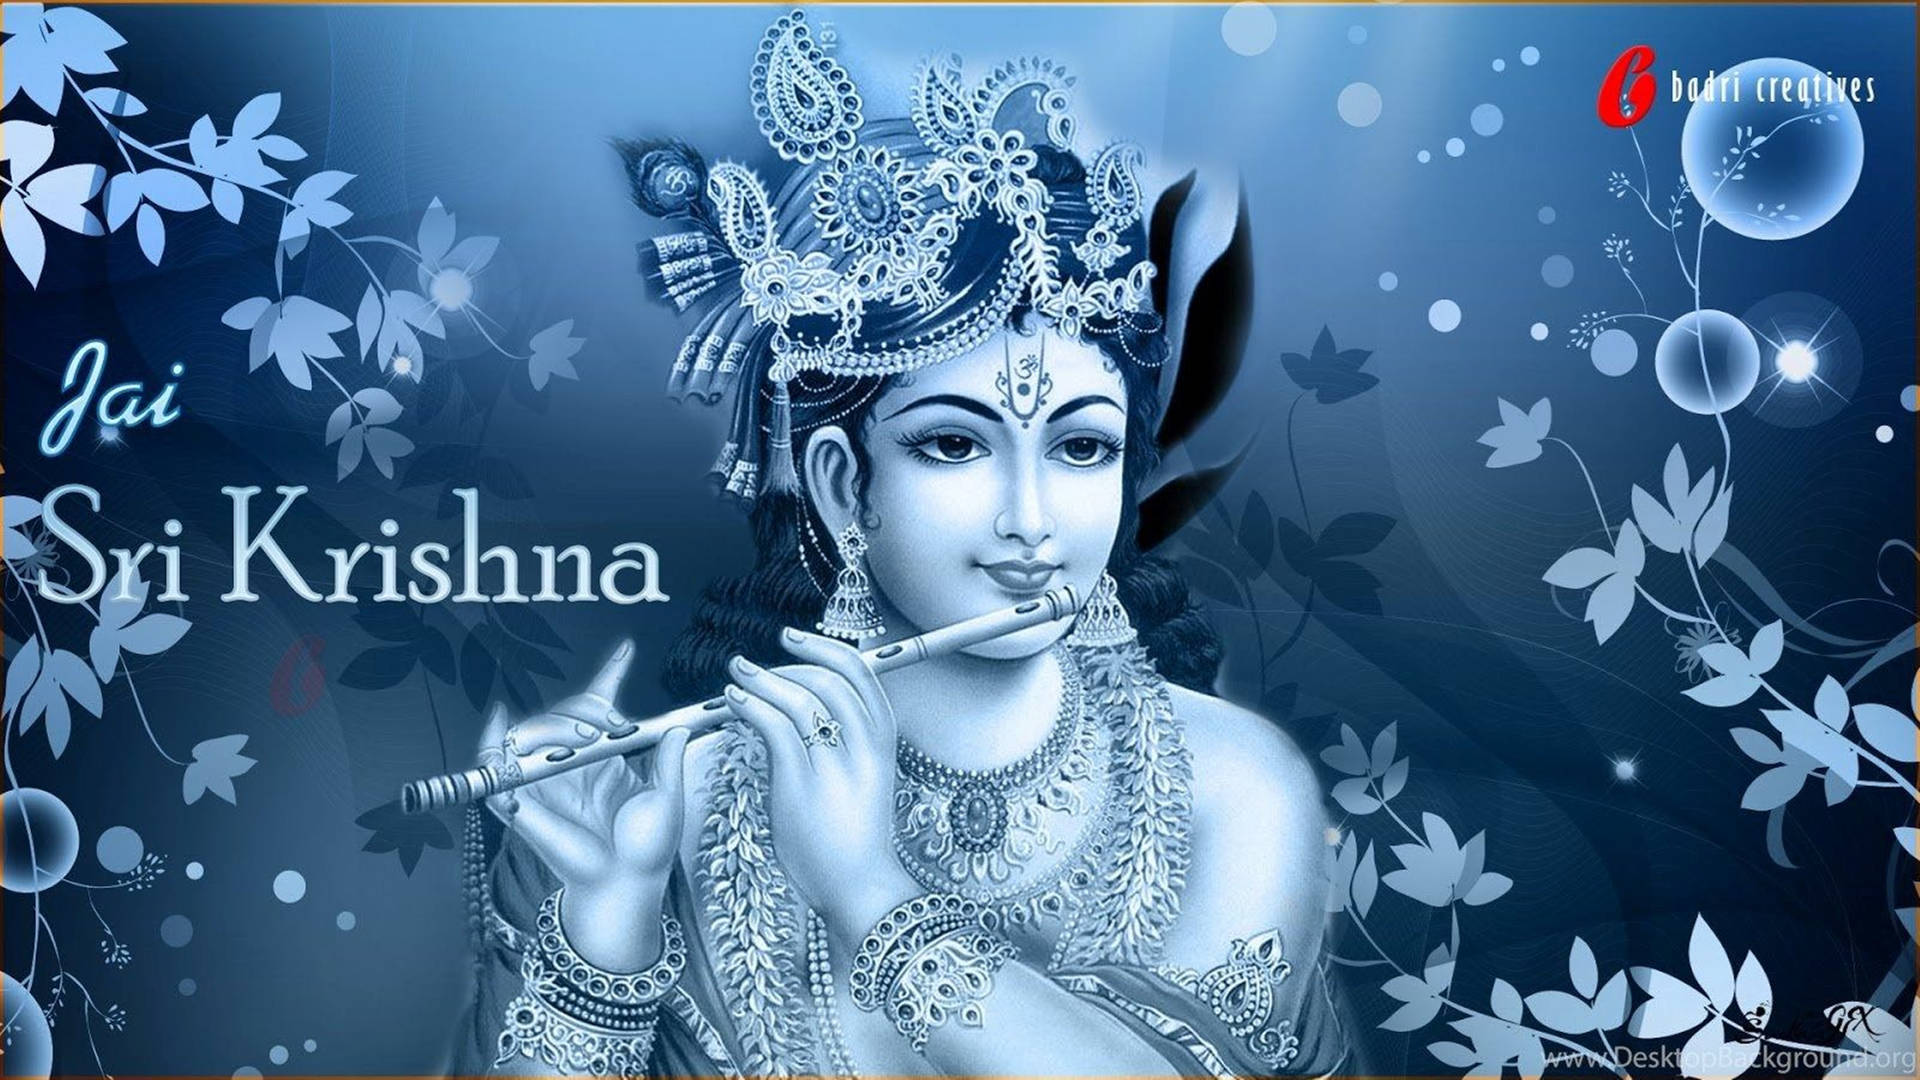 Top 999+ Lord Krishna 4k Wallpapers Full HD, 4K✅Free to Use